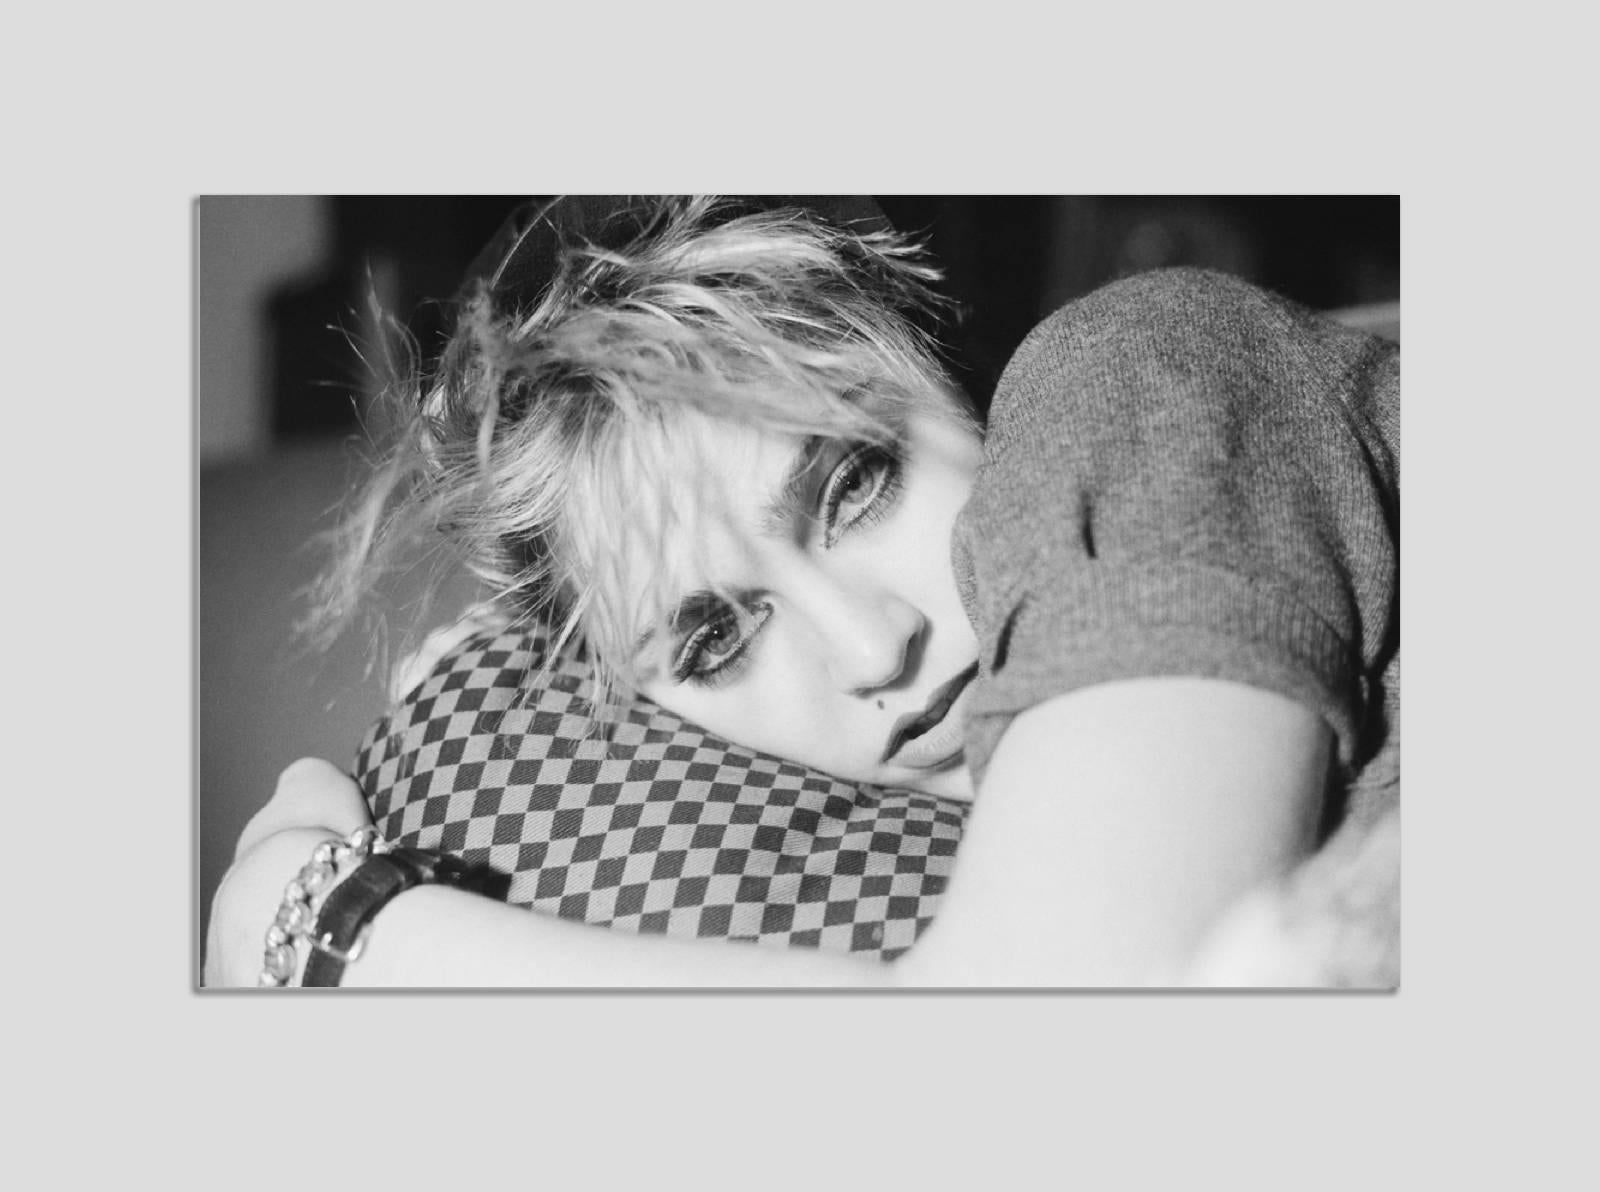 Peter Noble Portrait Photograph - 'Madonna' New York City  (Chromaluxe Aluminium Print)